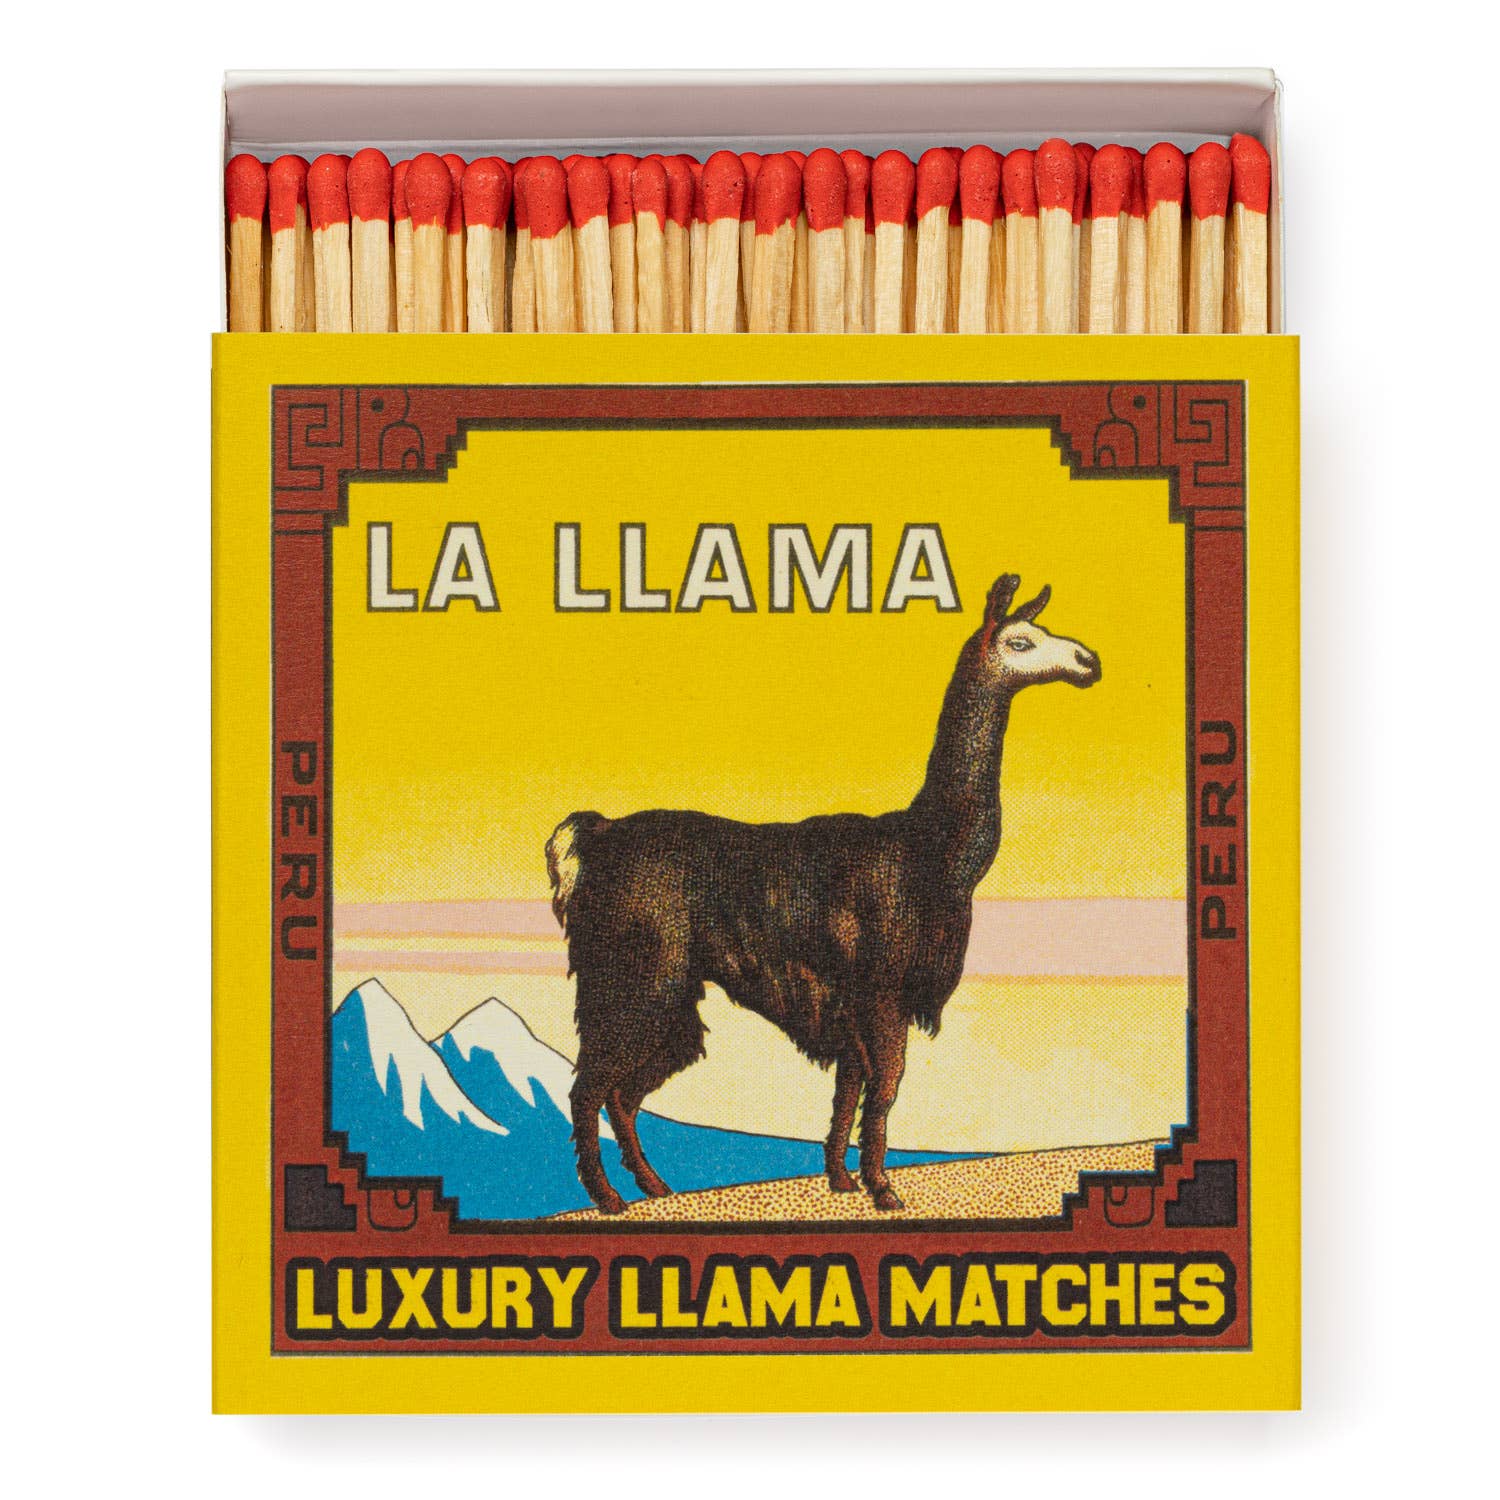 La llama Square Matchbox by Archivist Gallery